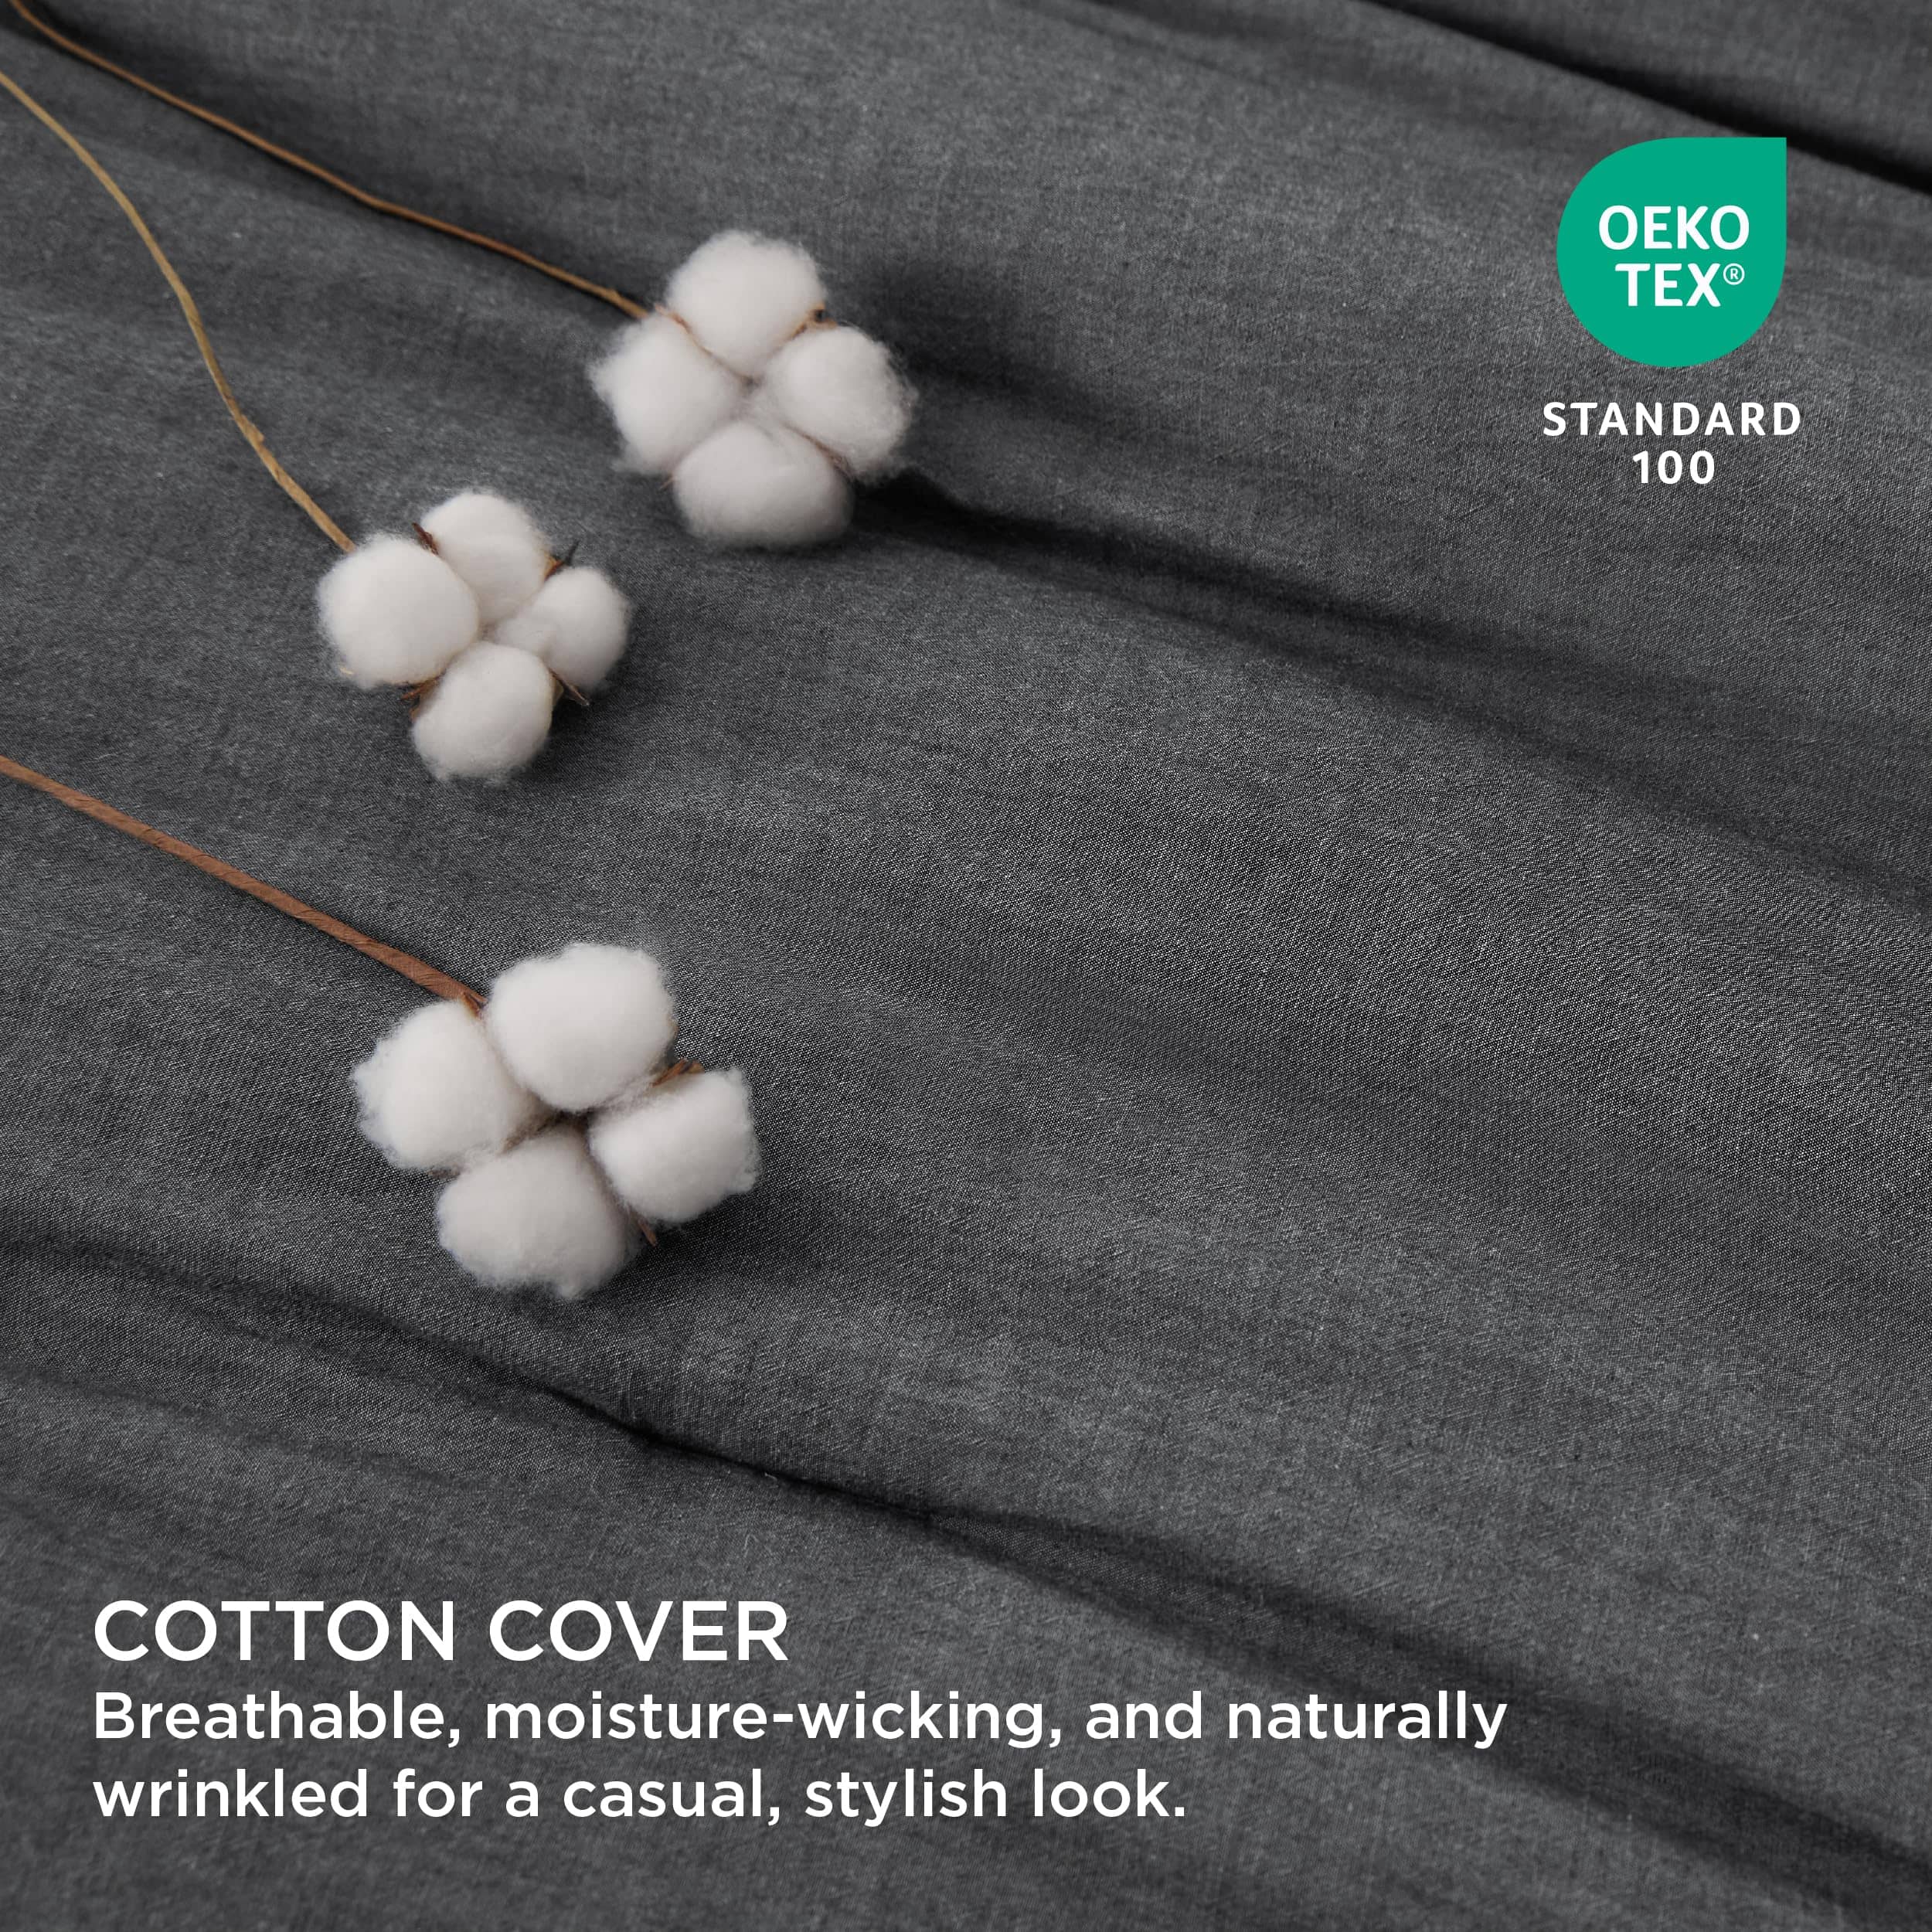 Prewashed Cotton Comforter Set